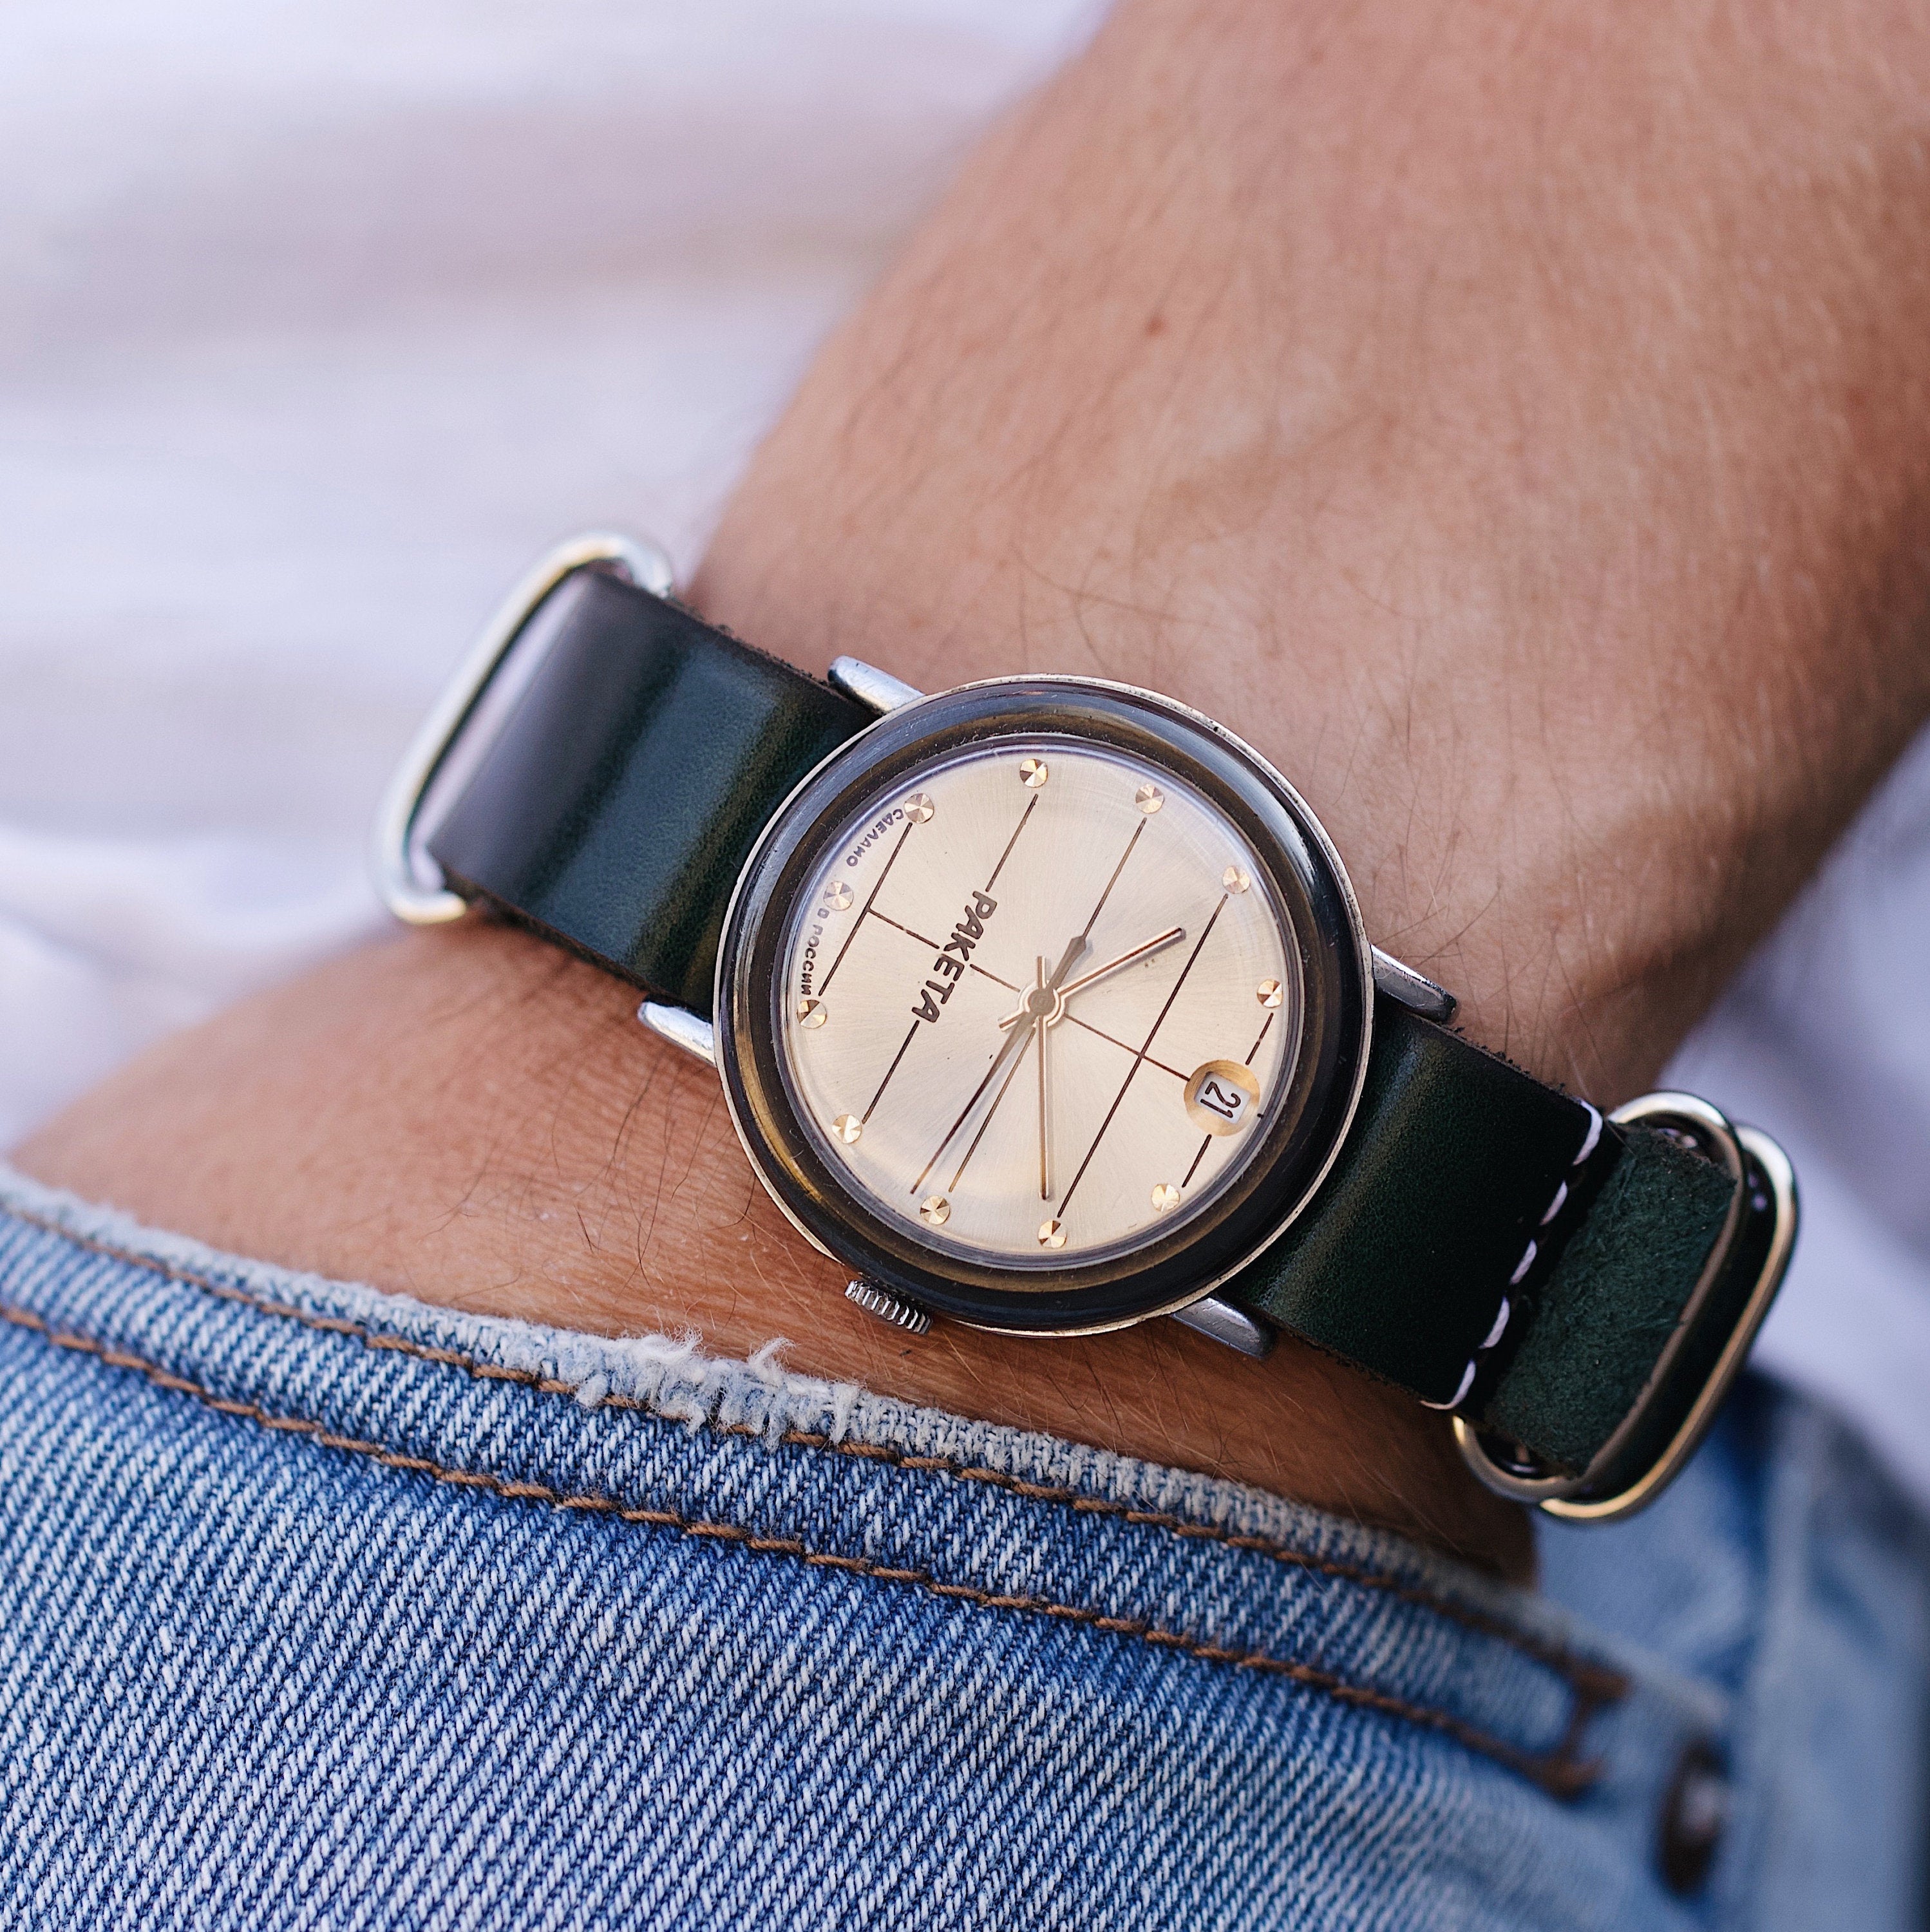 Vintage men's soviet mechanical watch Raketa with leather nato strap